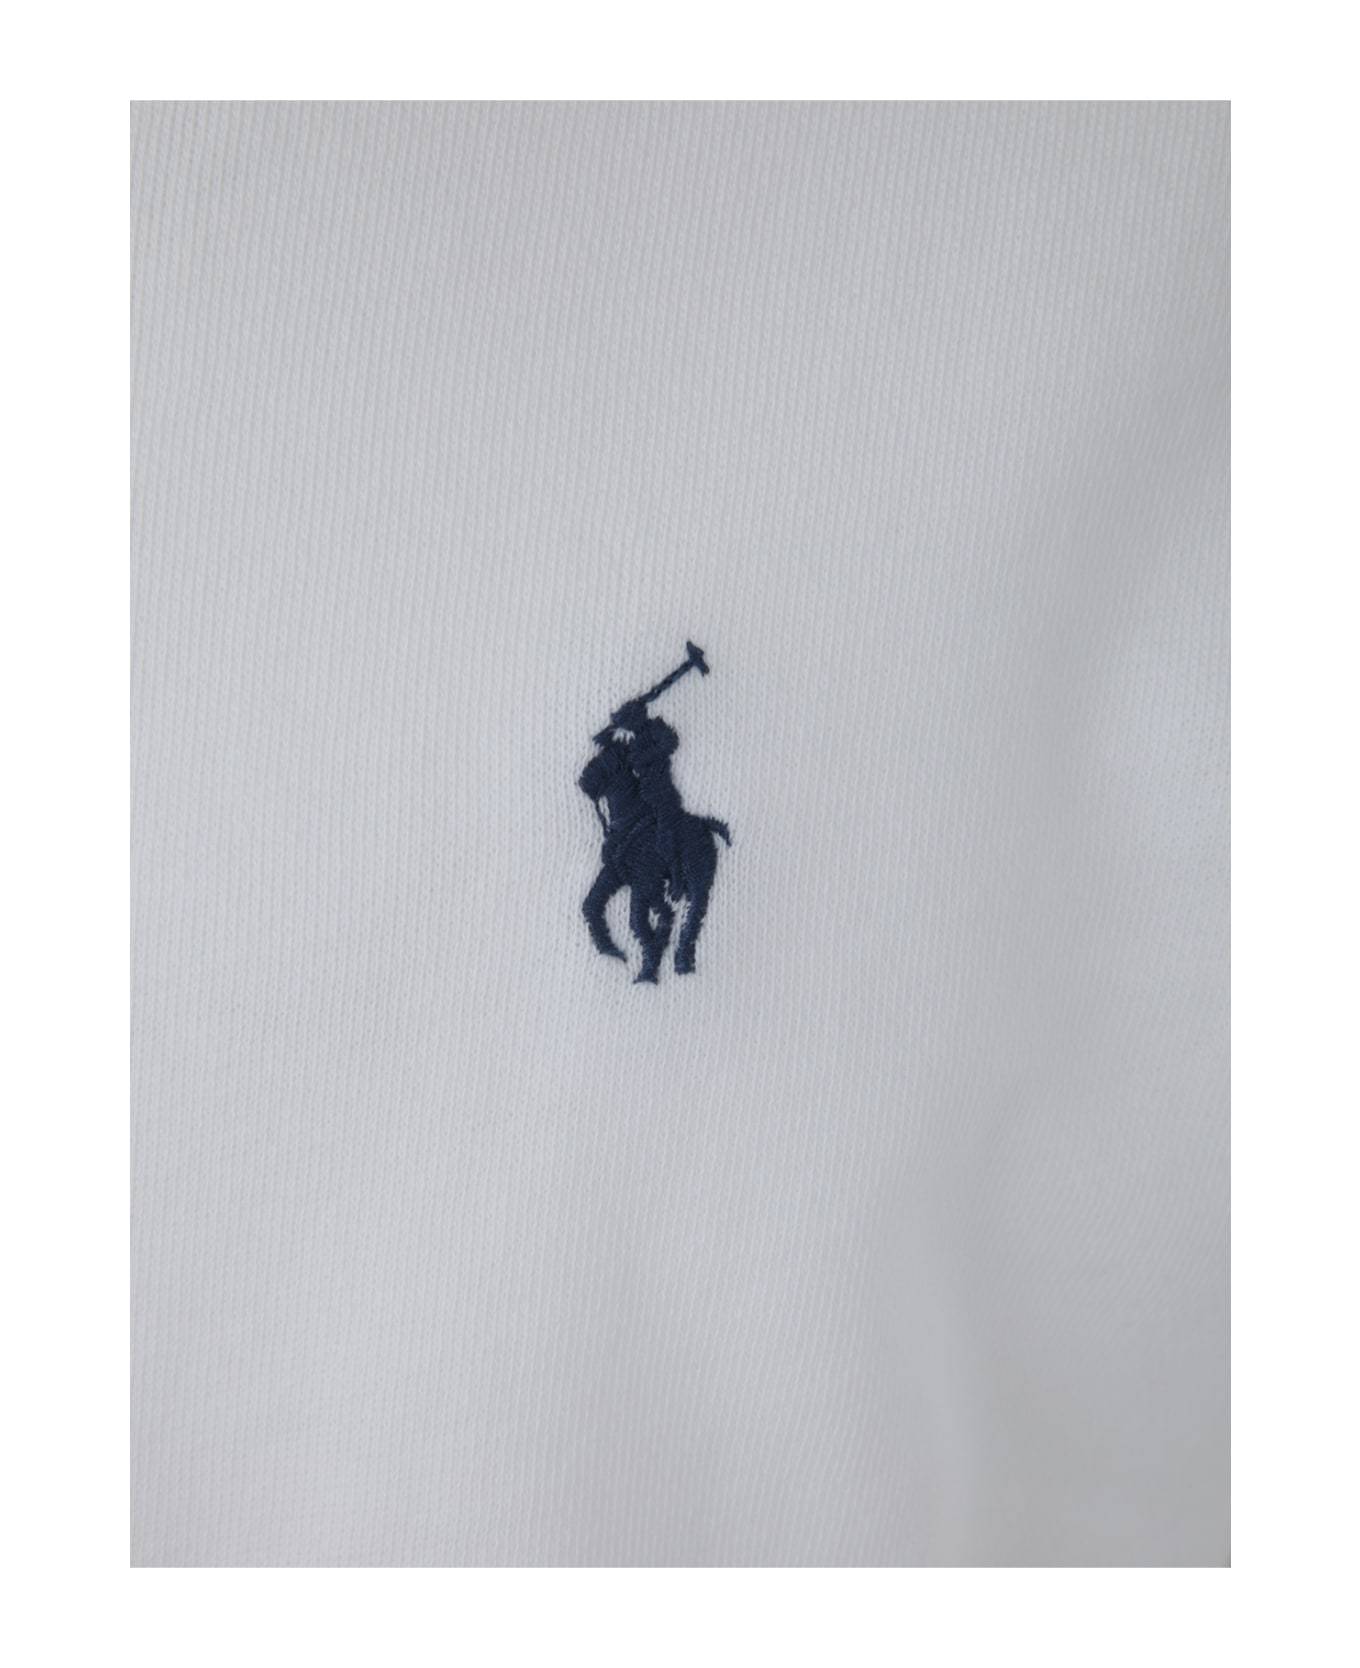 Polo Ralph Lauren Lscnm13 Long Sleeve Sweatshirt - White